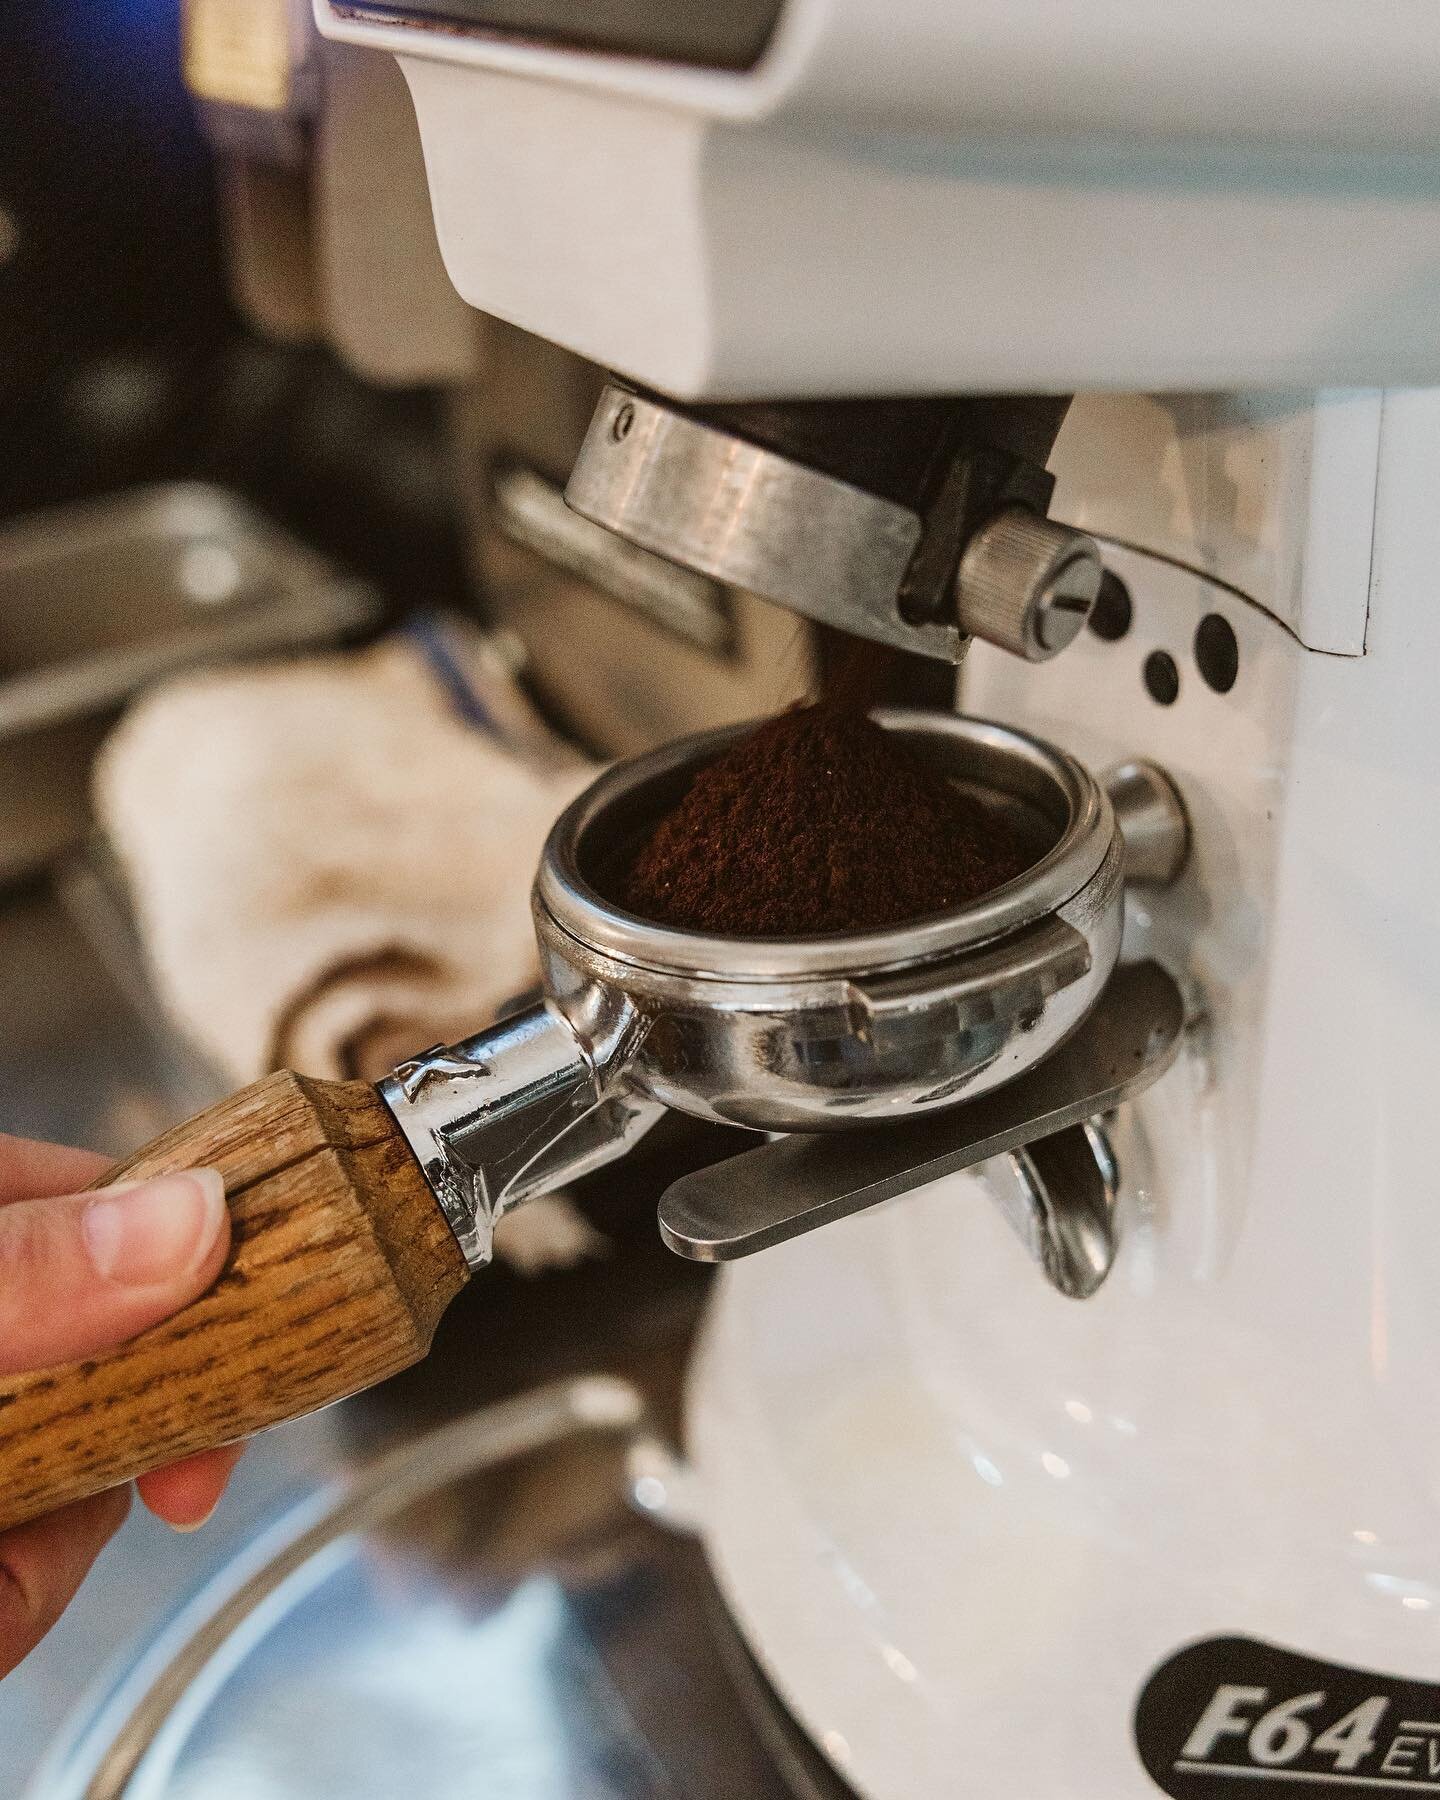 Swipe to brew &gt;&gt;&gt;

Open till 5pm for the rest of the week ☕️🍪

#barista #baristalife #coffeeshop #espresso #espressomachine #espressoshot